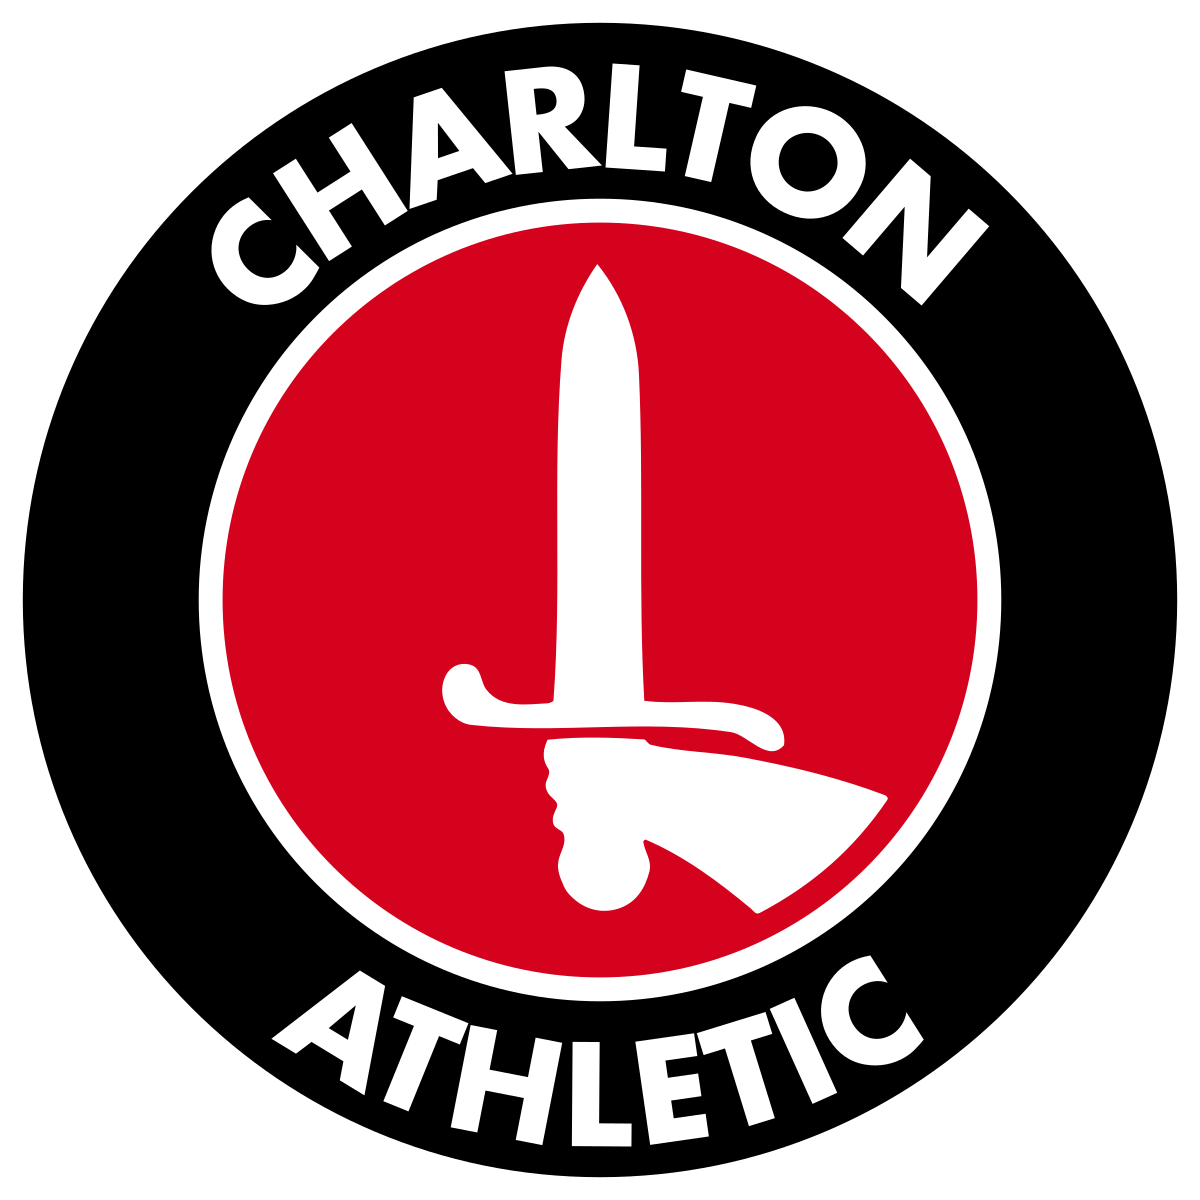 Charlton athletic